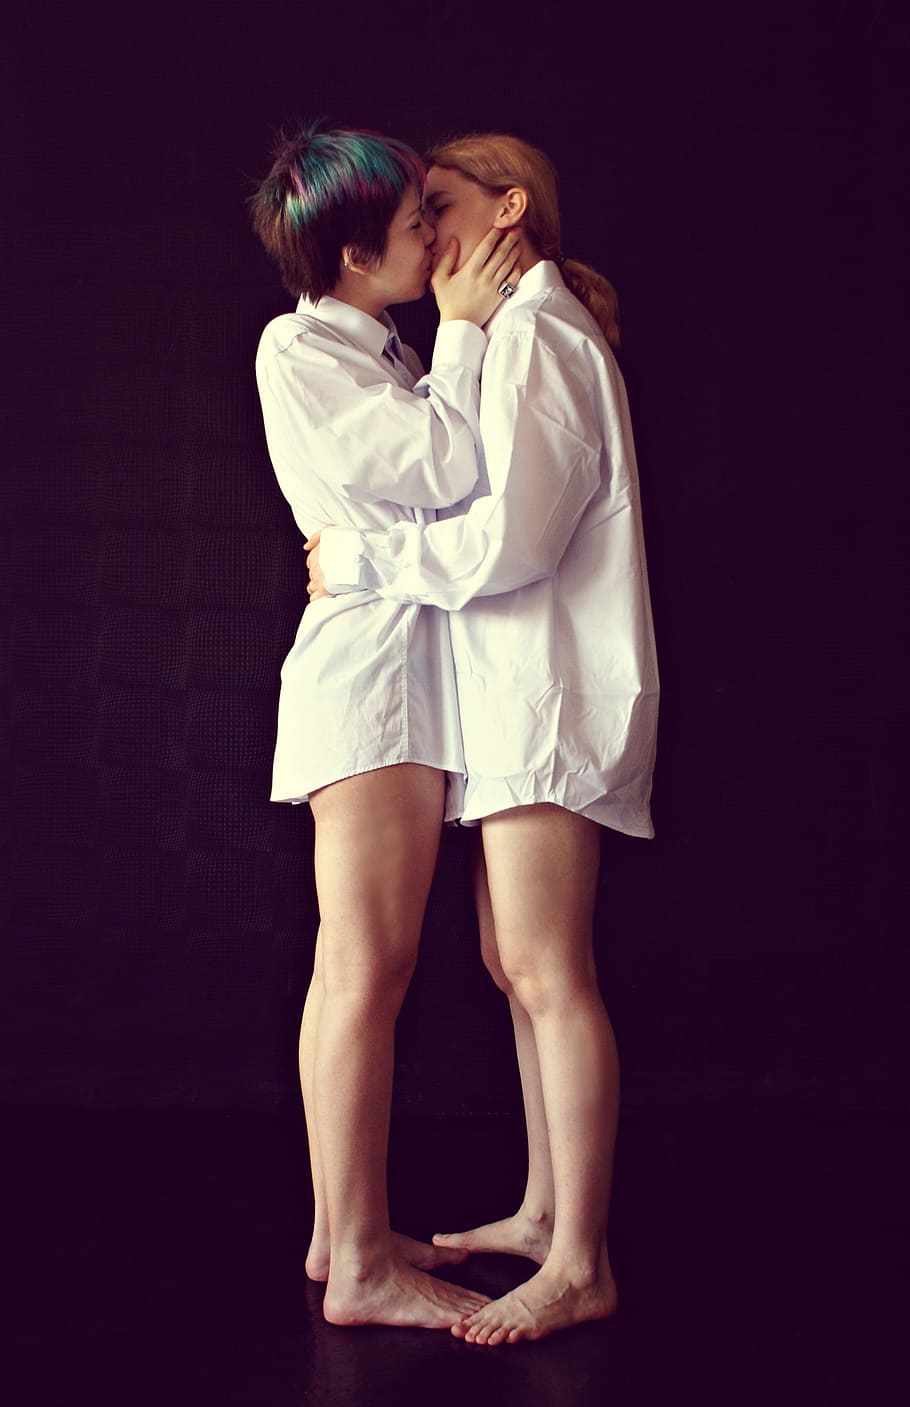 HD wallpaper: two kissing women wearing white sport shirts, lgbt